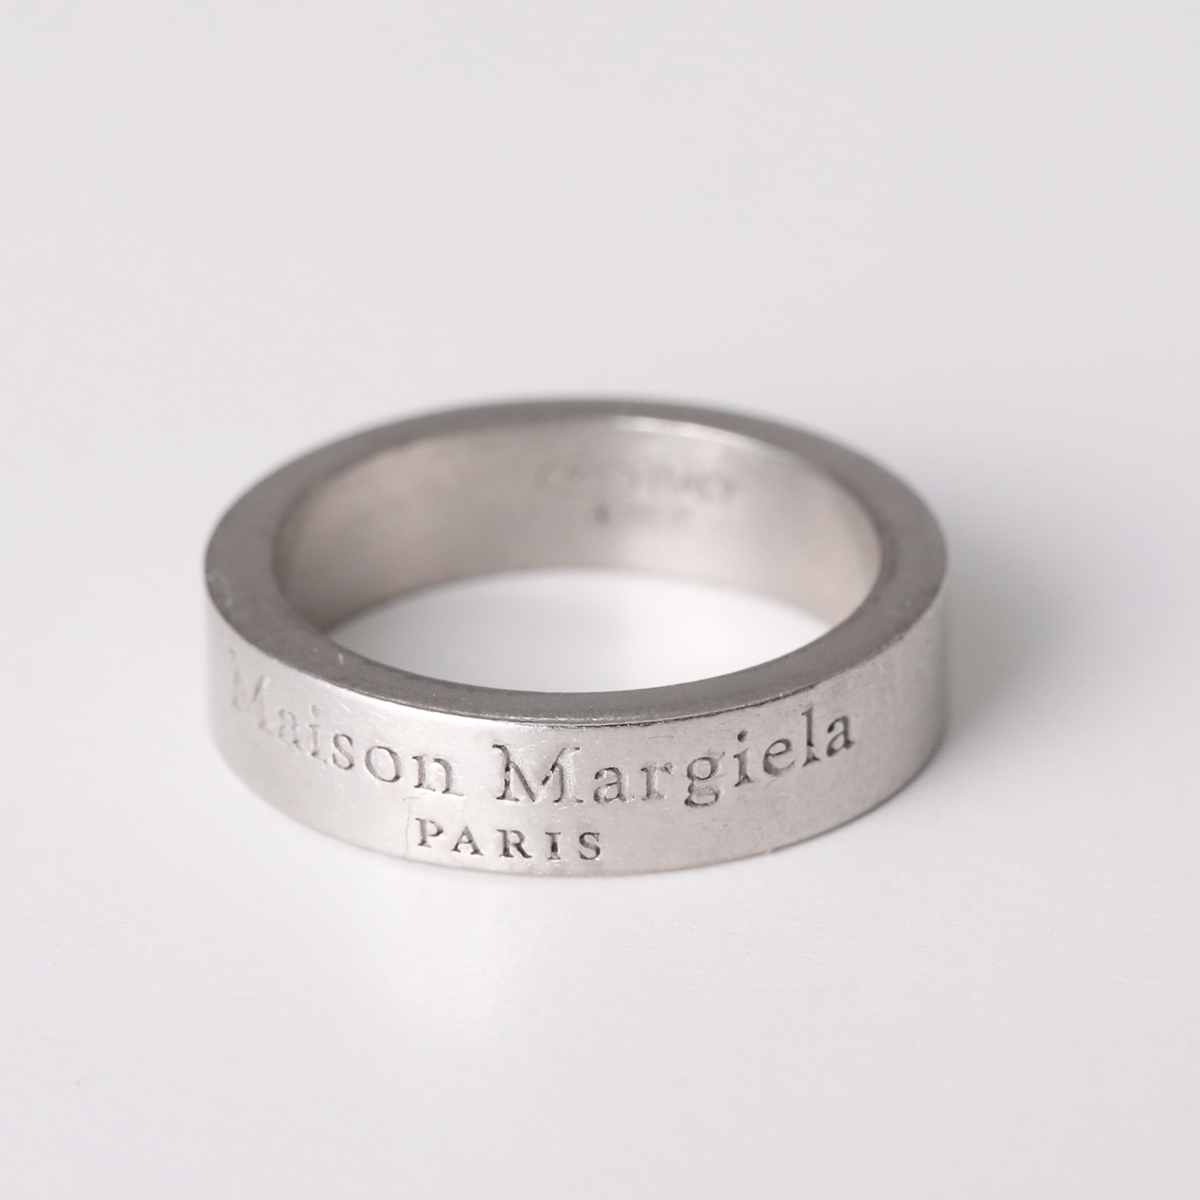 MAISON MARGIELA メゾンマルジェラ 11 リング SM1UQ0081 SV0158 メンズ ミディアム アクセサリー 指輪 ロゴ  シルバー925 silver925 カラー2色